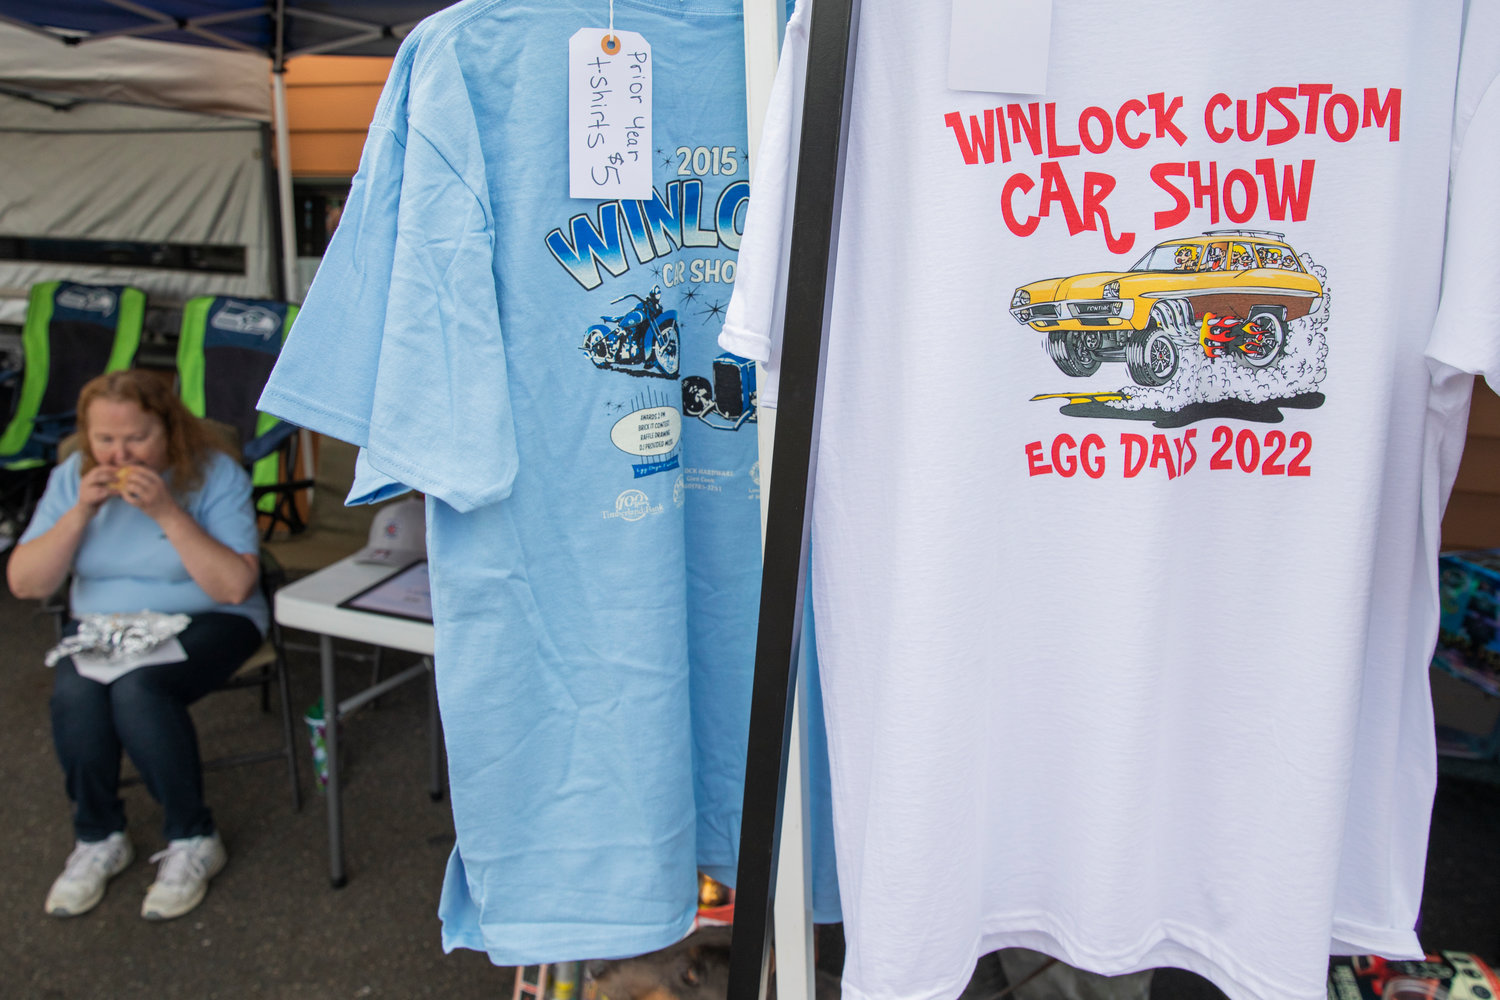 Egg Days shirts featuring the Winlock Custom Car Show hang on display Saturday morning.